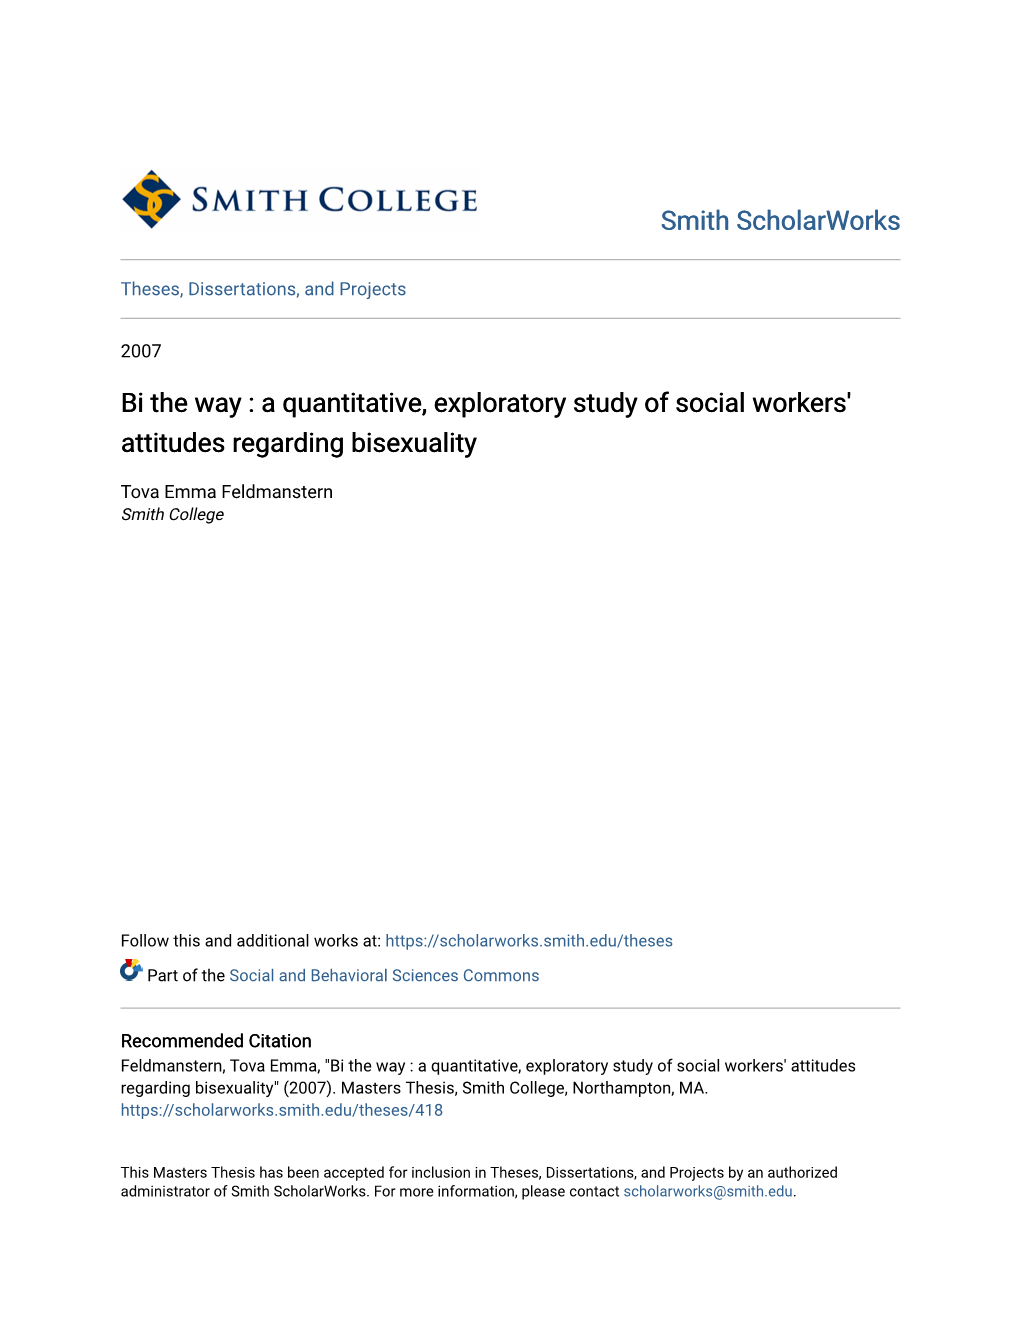 Bi the Way : a Quantitative, Exploratory Study of Social Workers' Attitudes Regarding Bisexuality